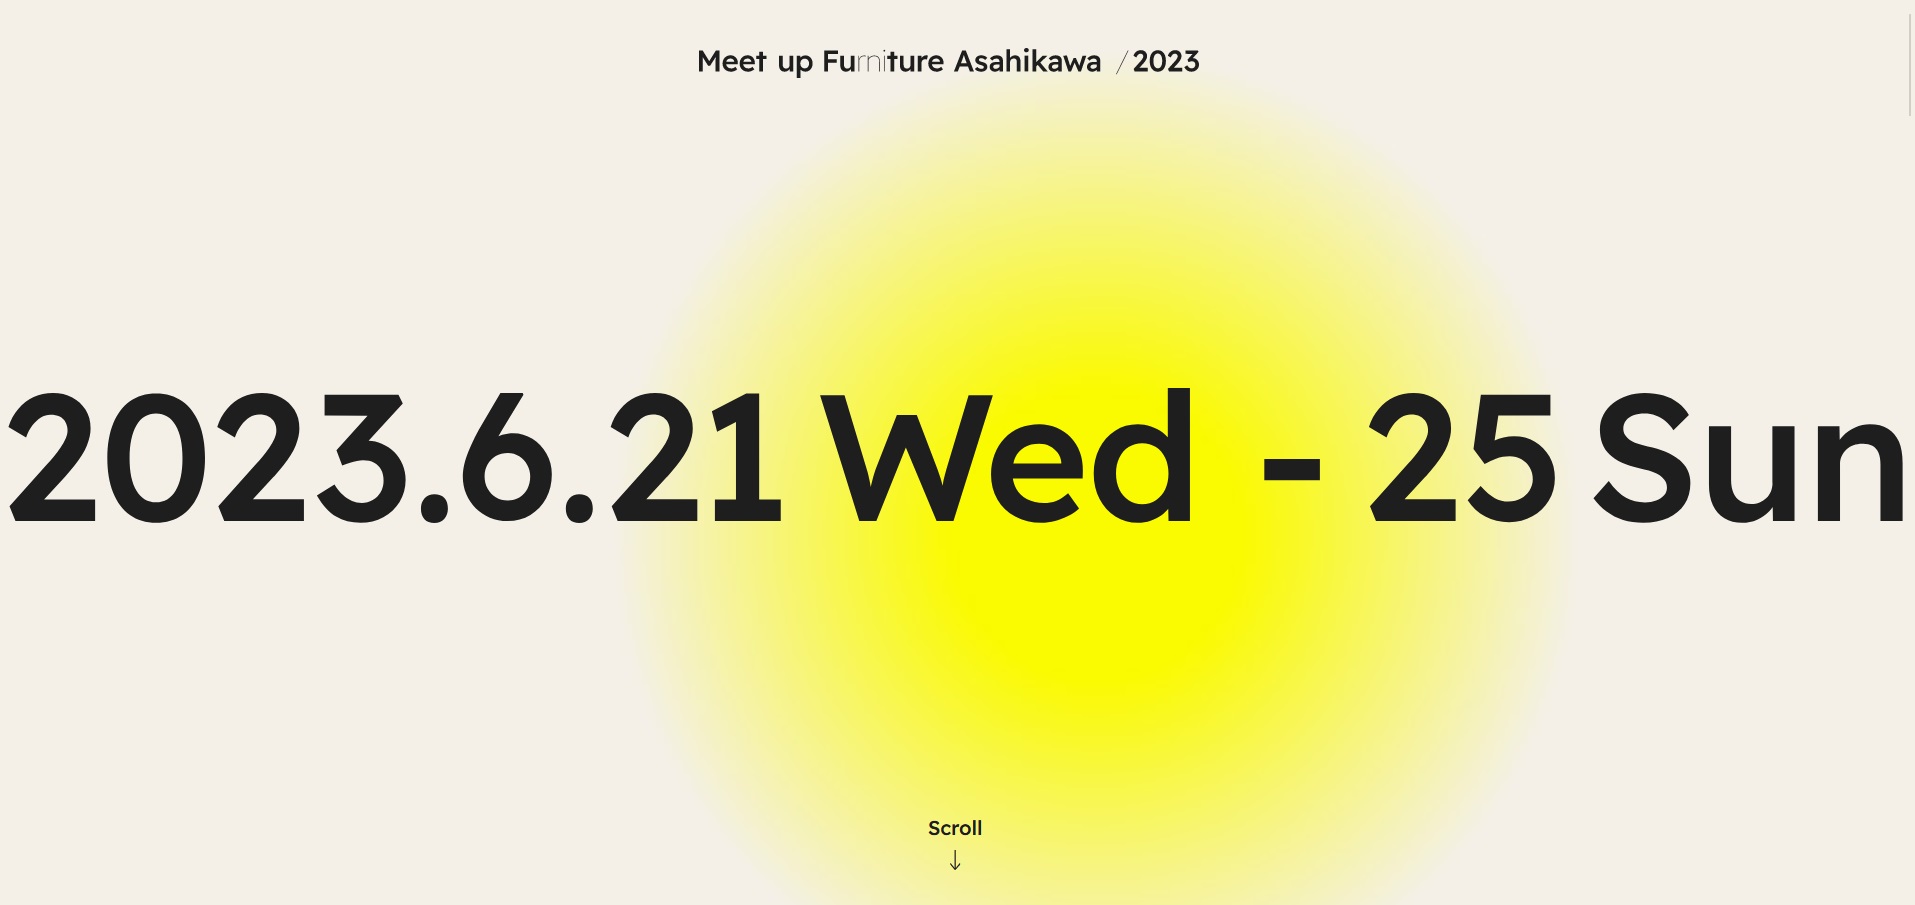 【2023】Meet up Furniture Asahikawaが6月に開催！プレスリリース配信も要チェック！